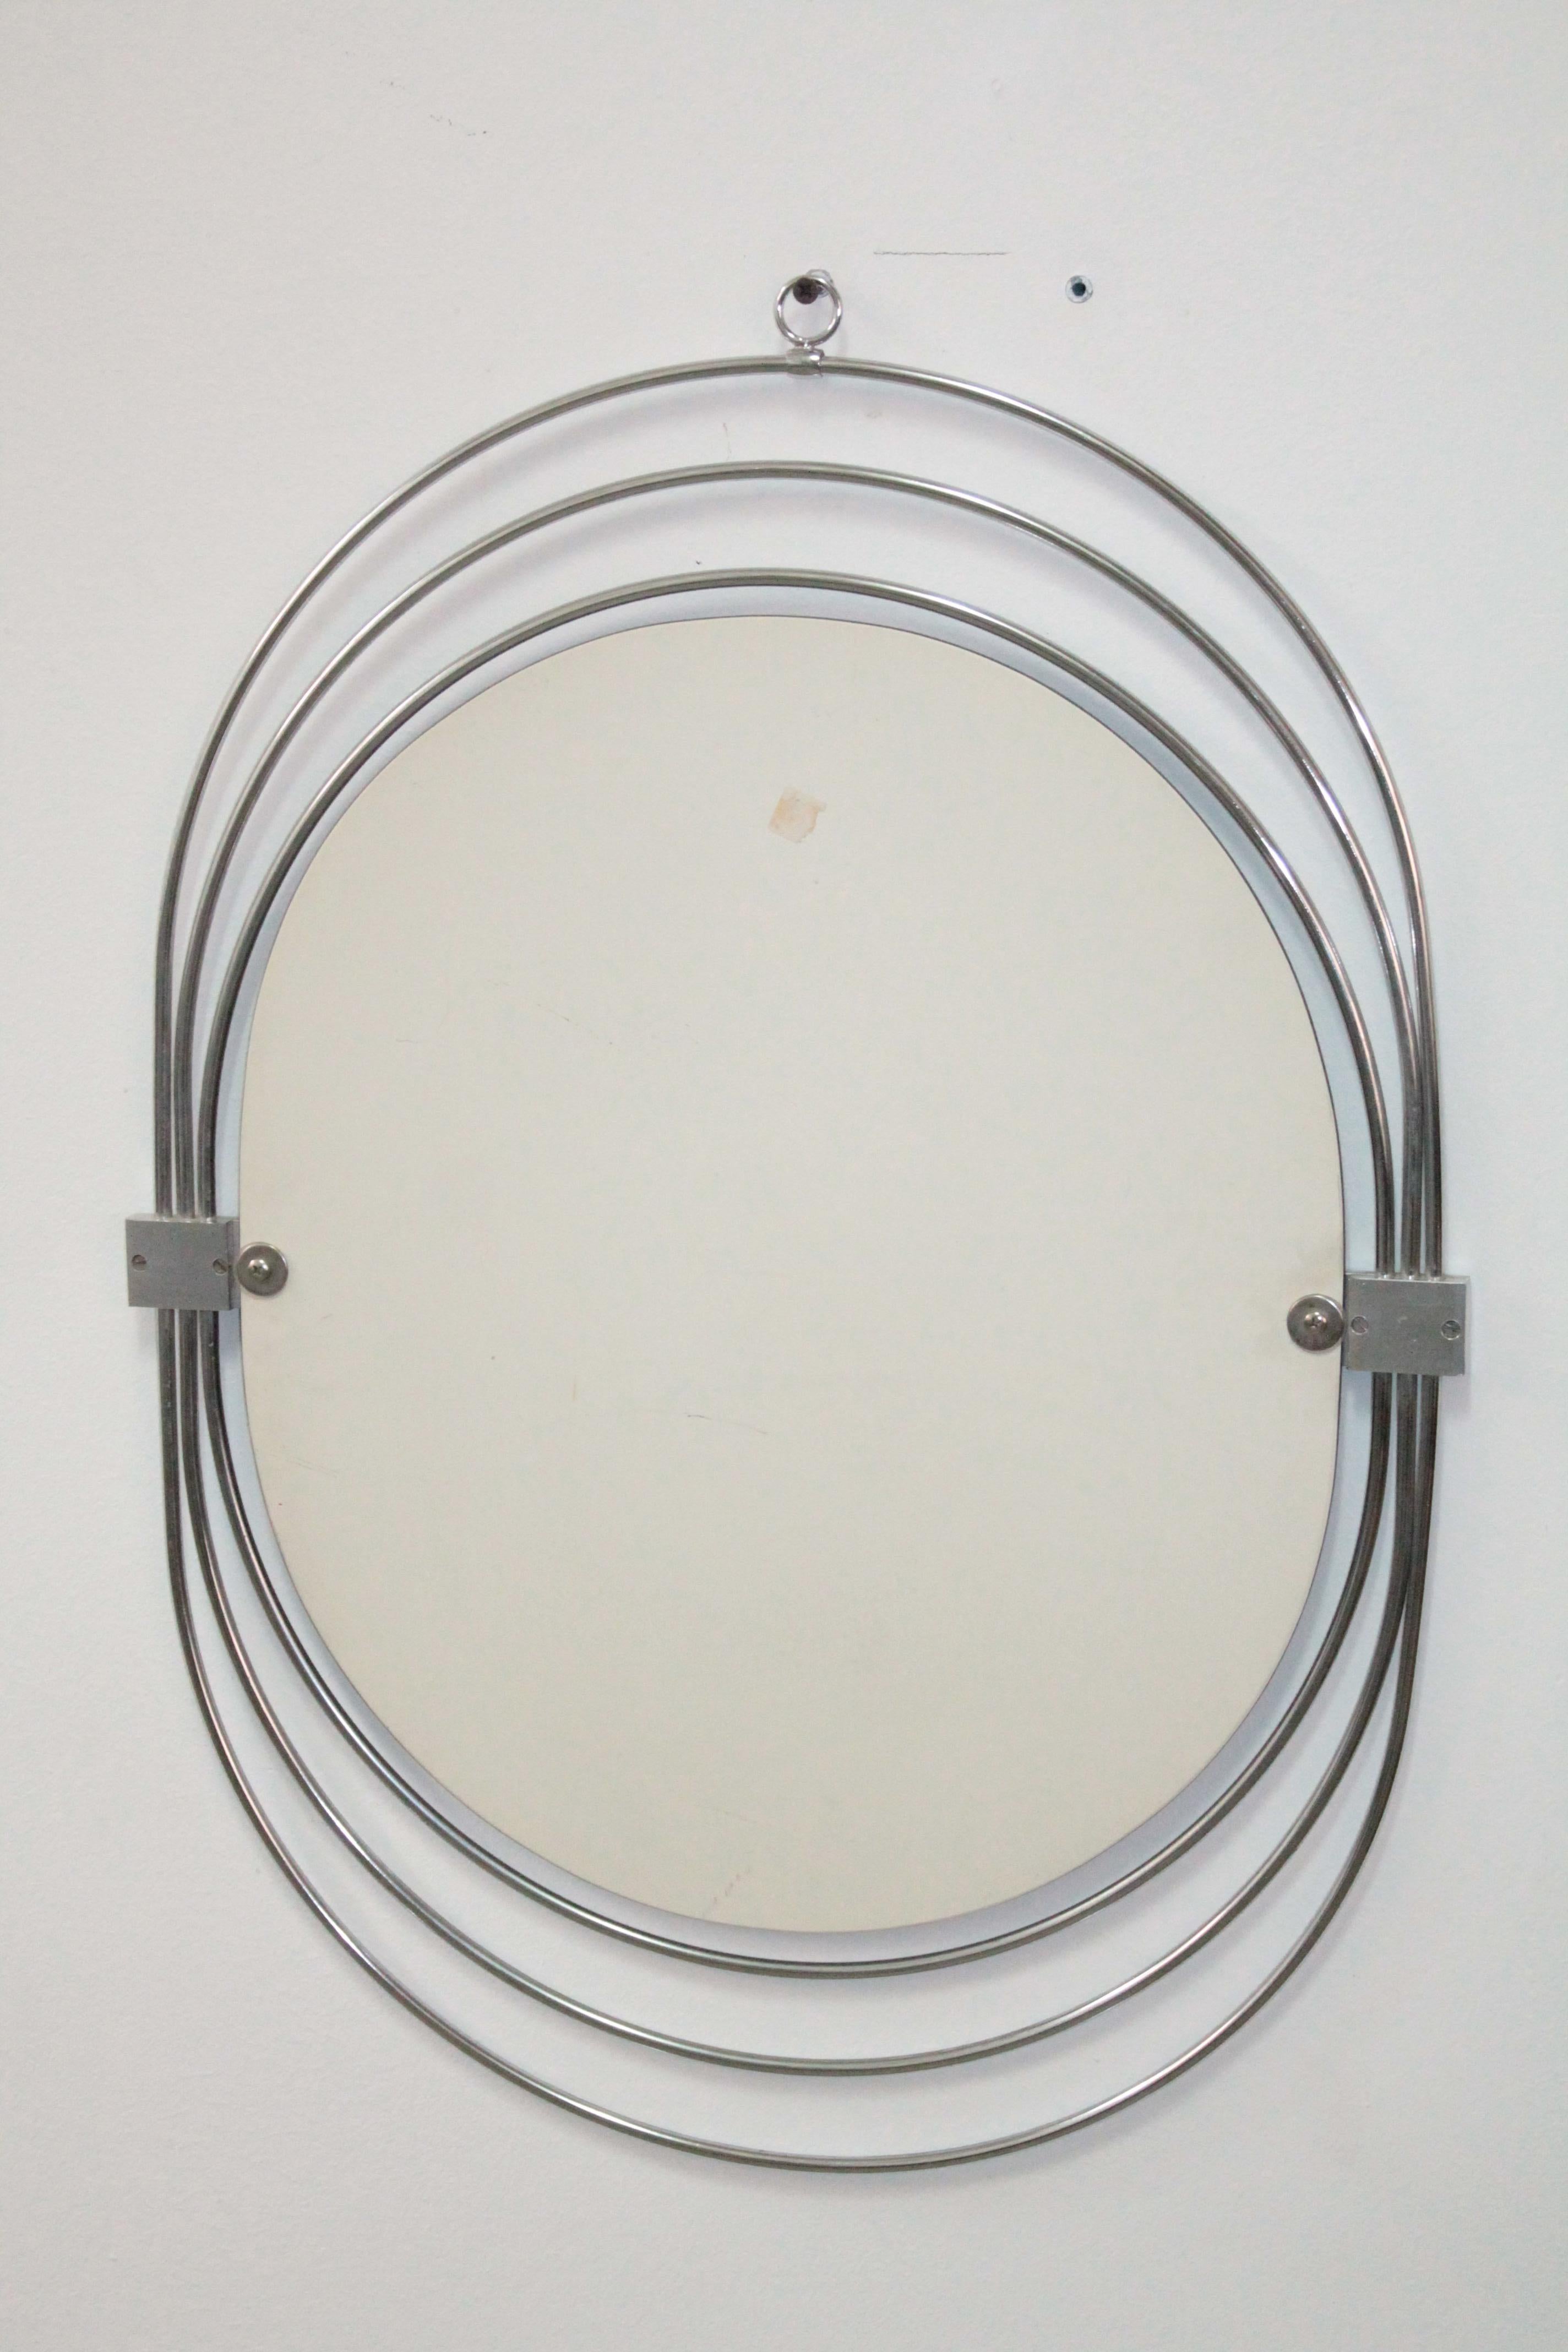 Modernist Steel Chrome Wall Mirror by Gaetano Sciolari 1970s Smoke Glass 2